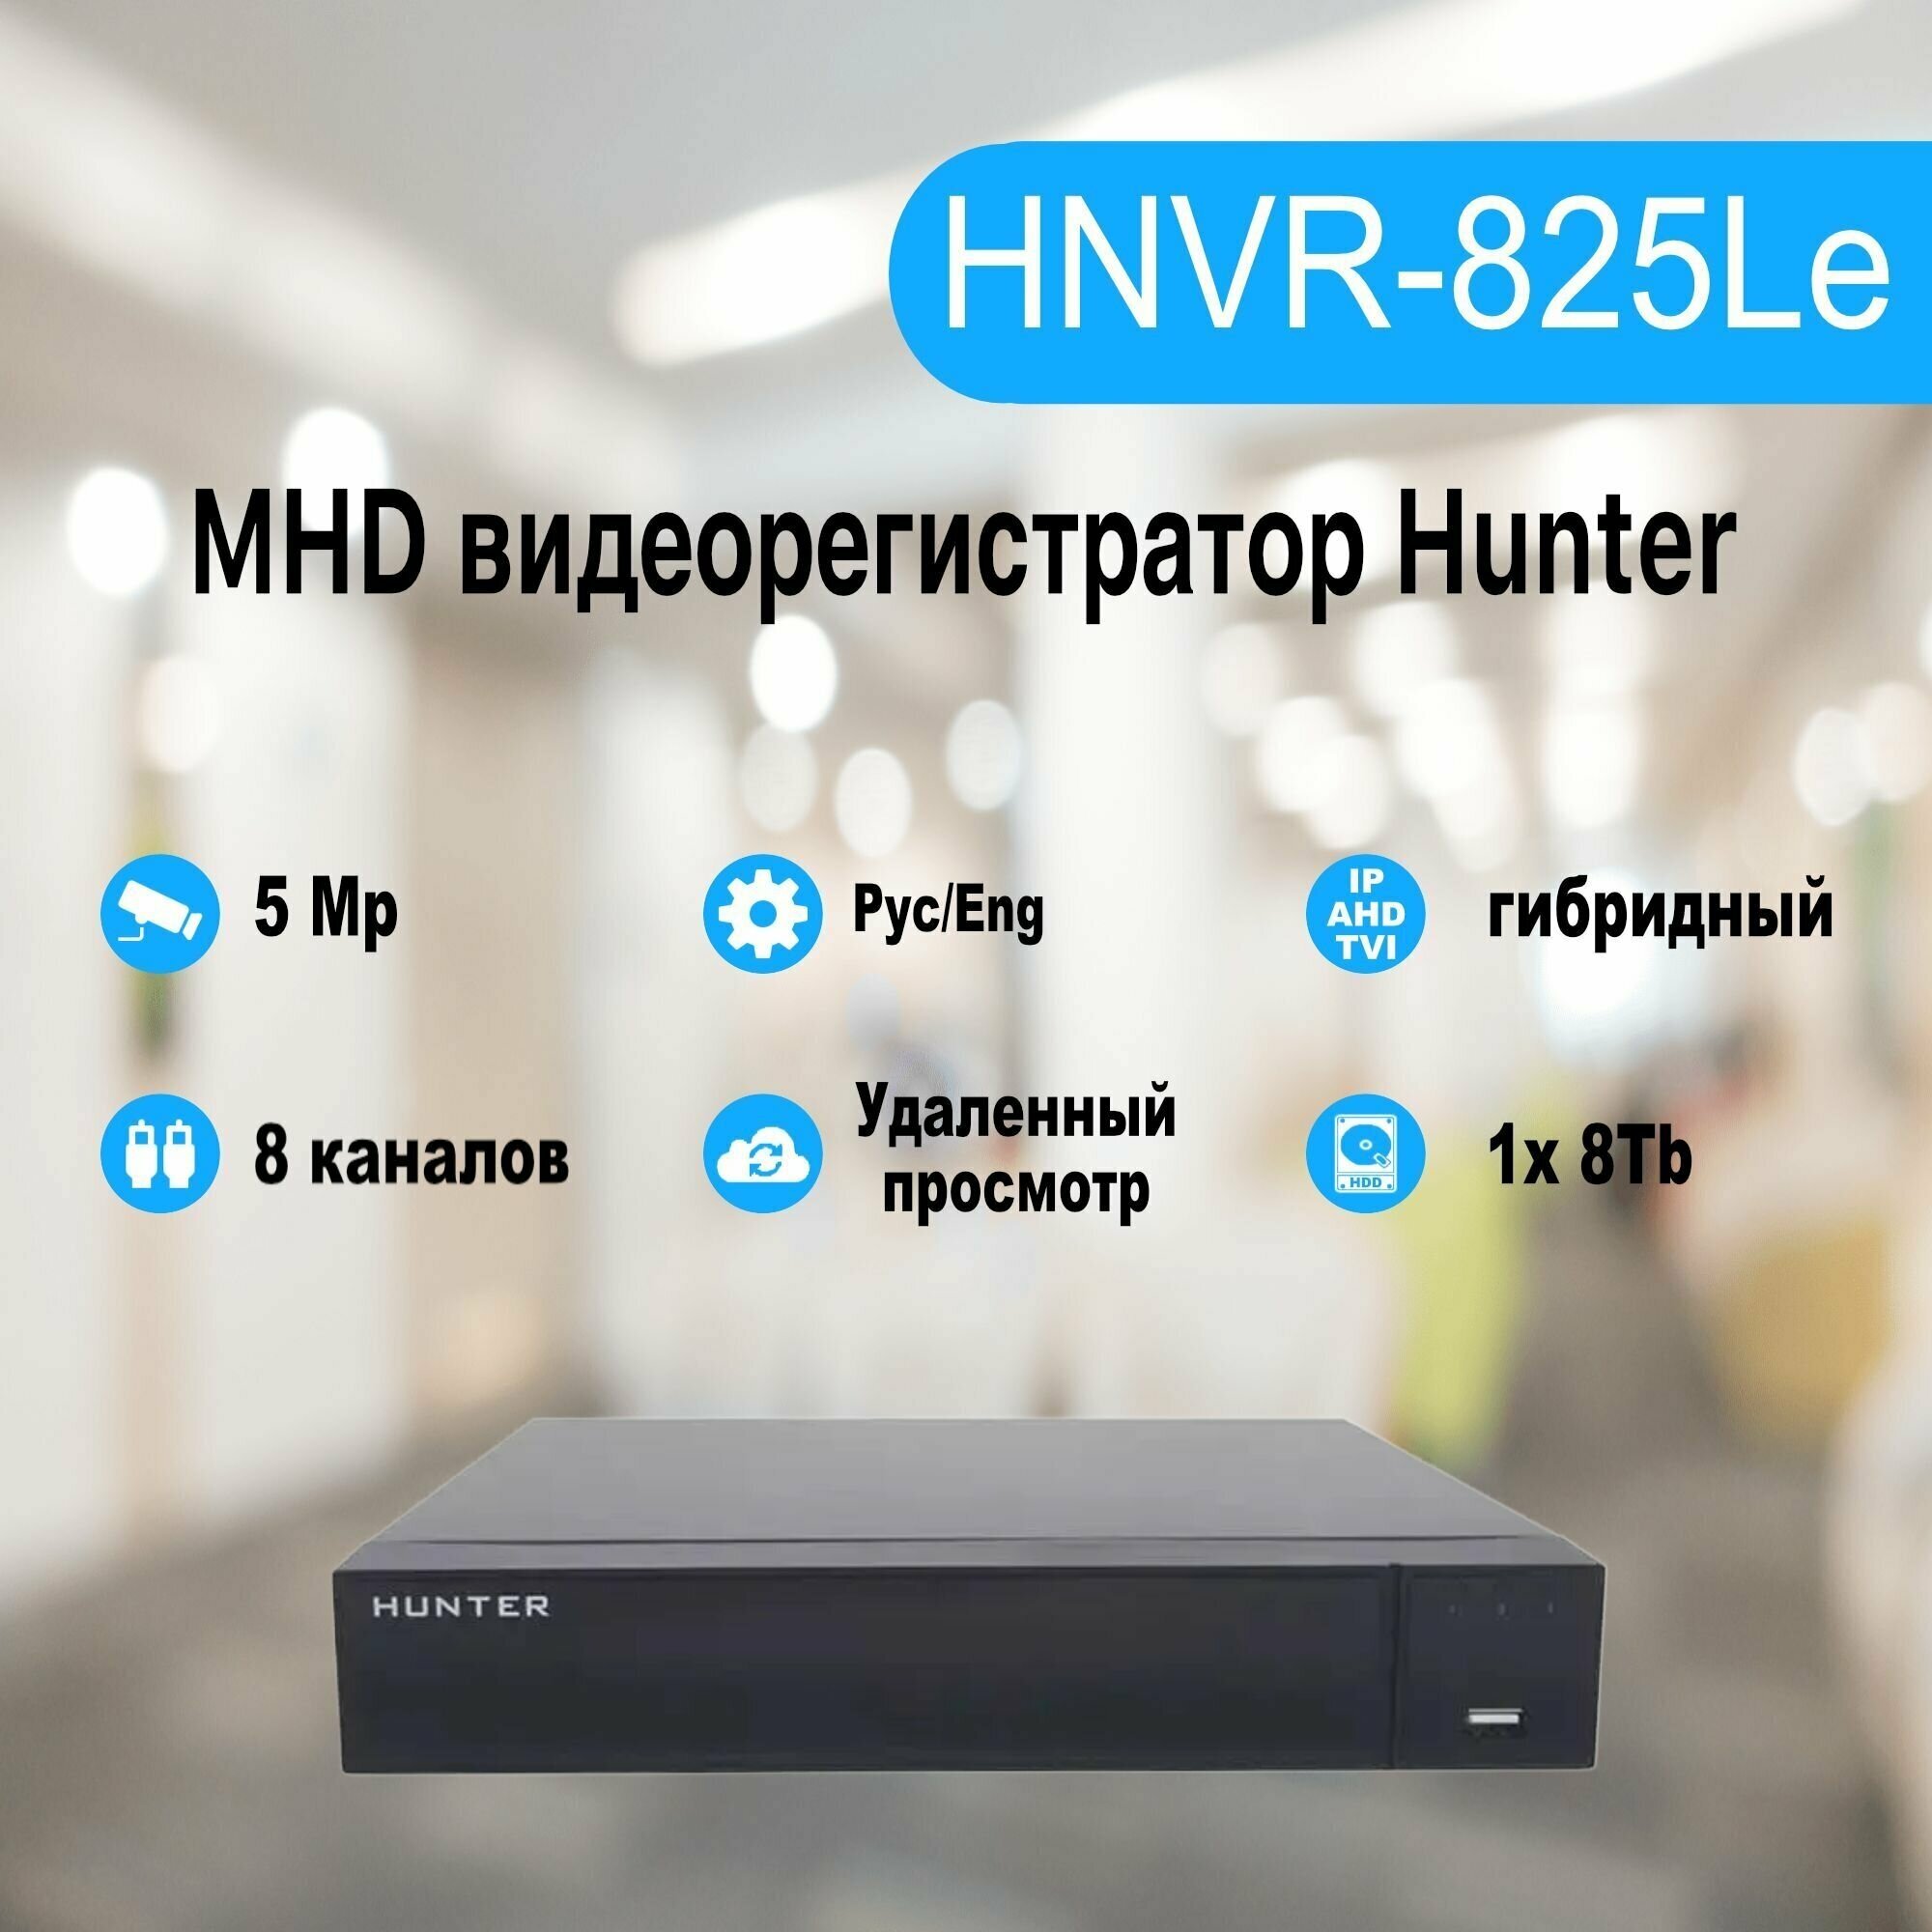 MHD видеорегистратор Hunter HNVR-825Le